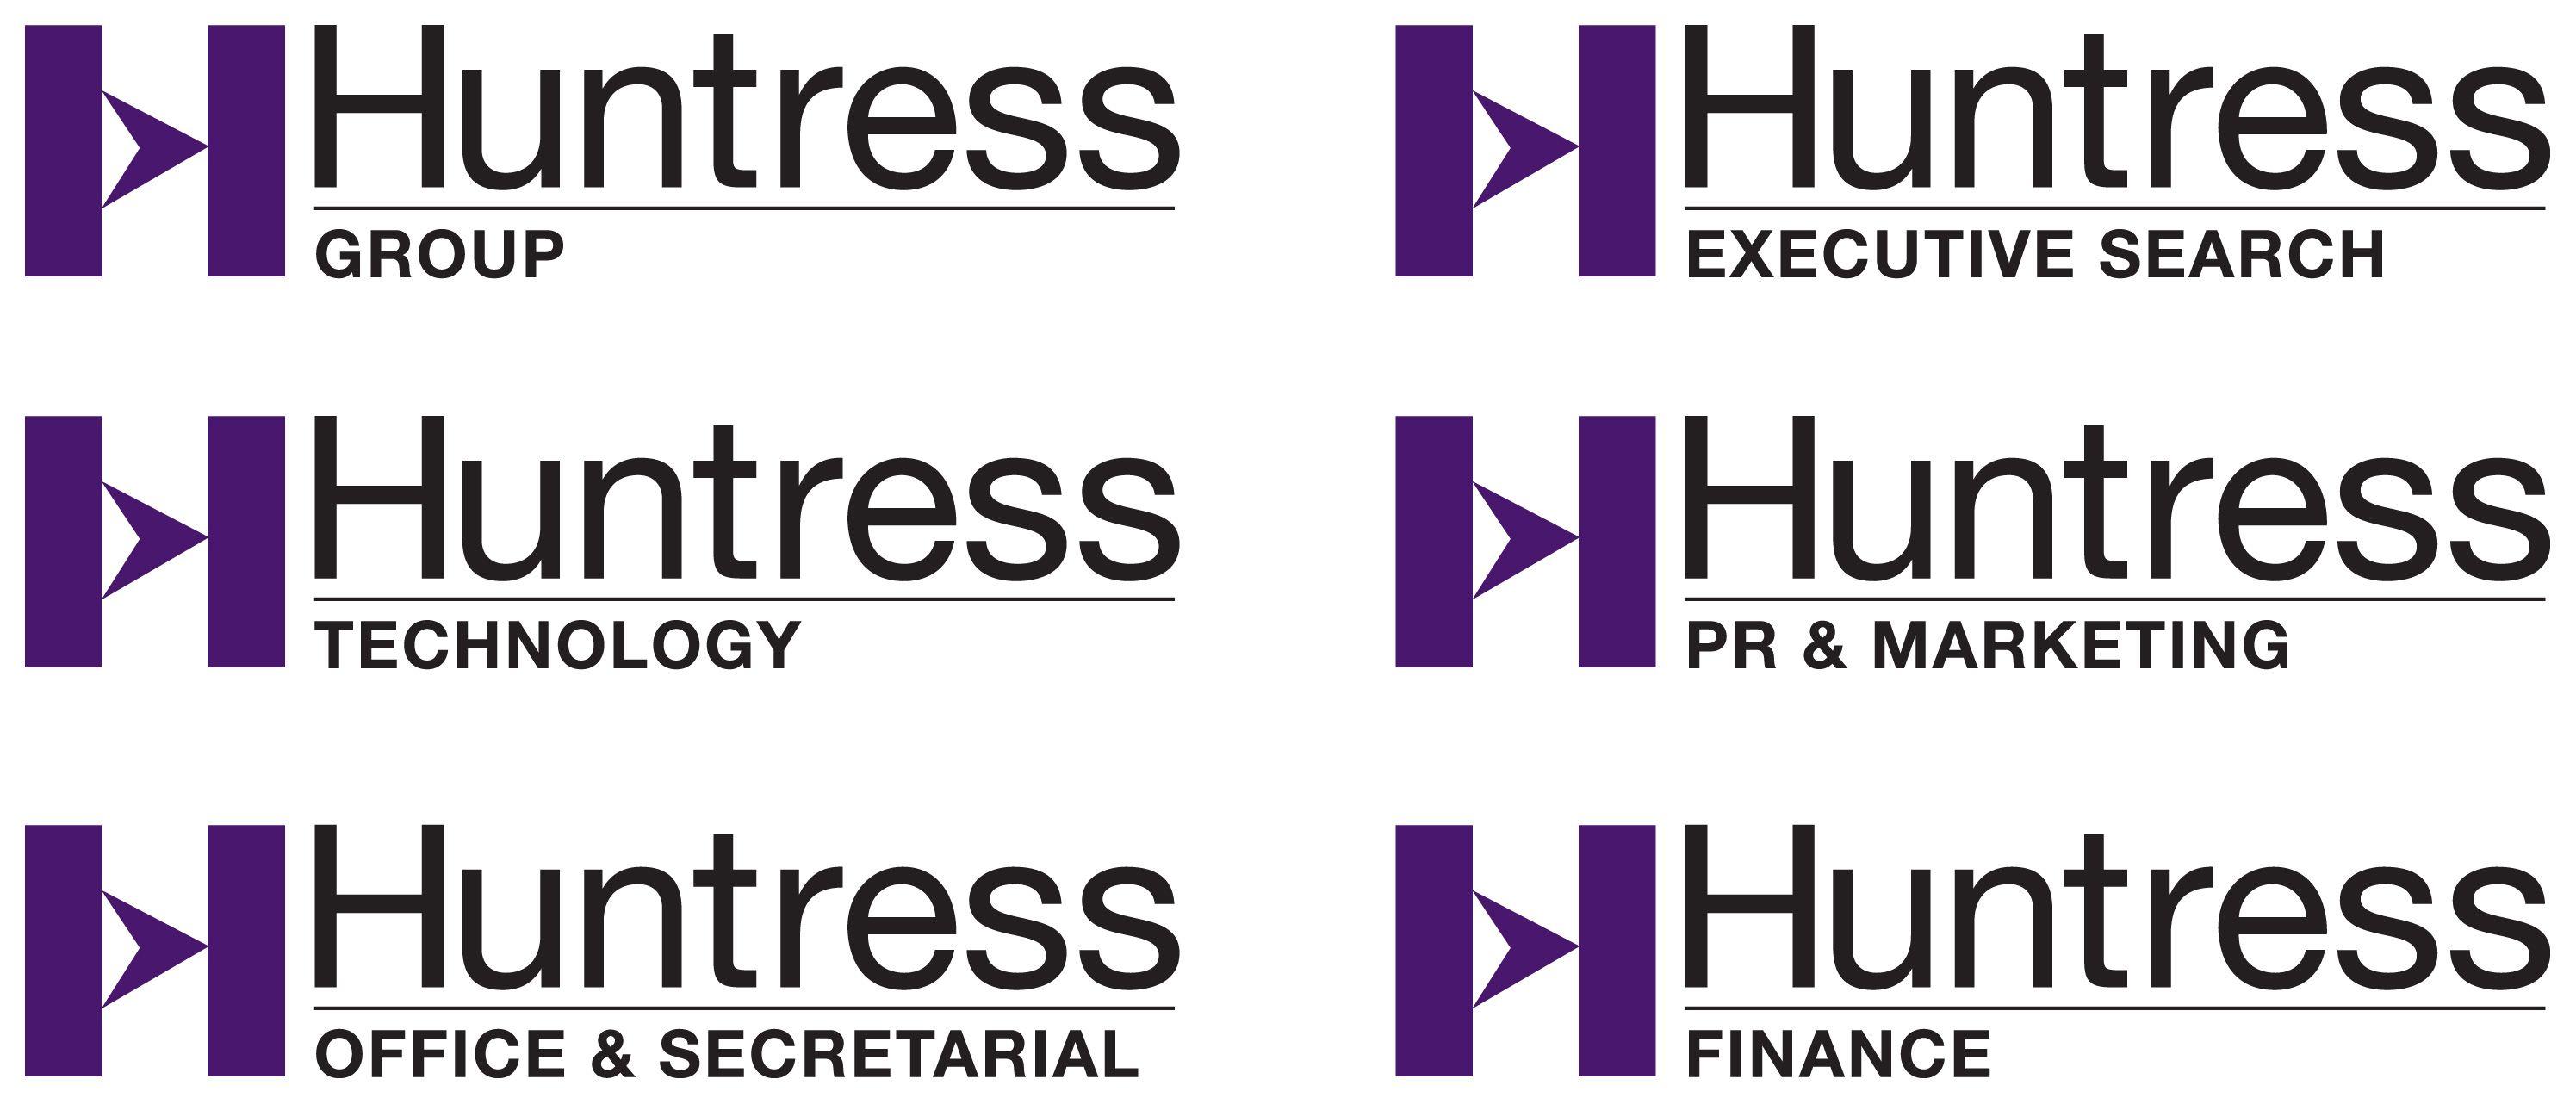 Huntress Logo - Huntress Group Logo(s) - Jason Powell Design